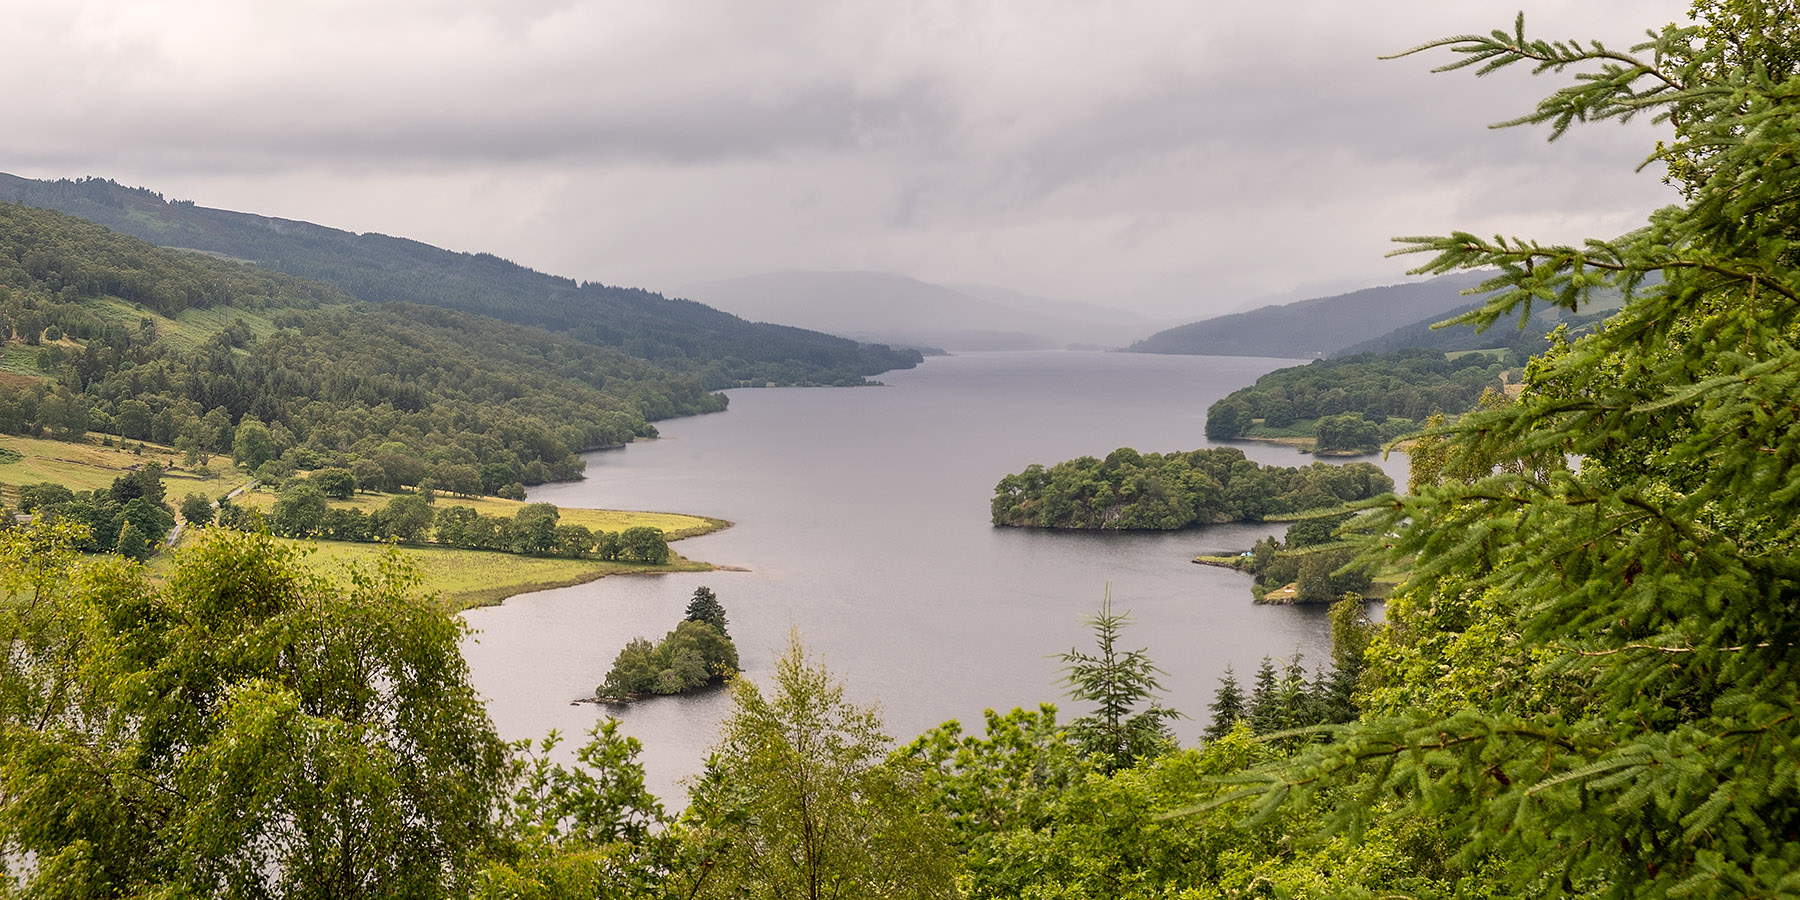 The Queen's View over Loch Tummel